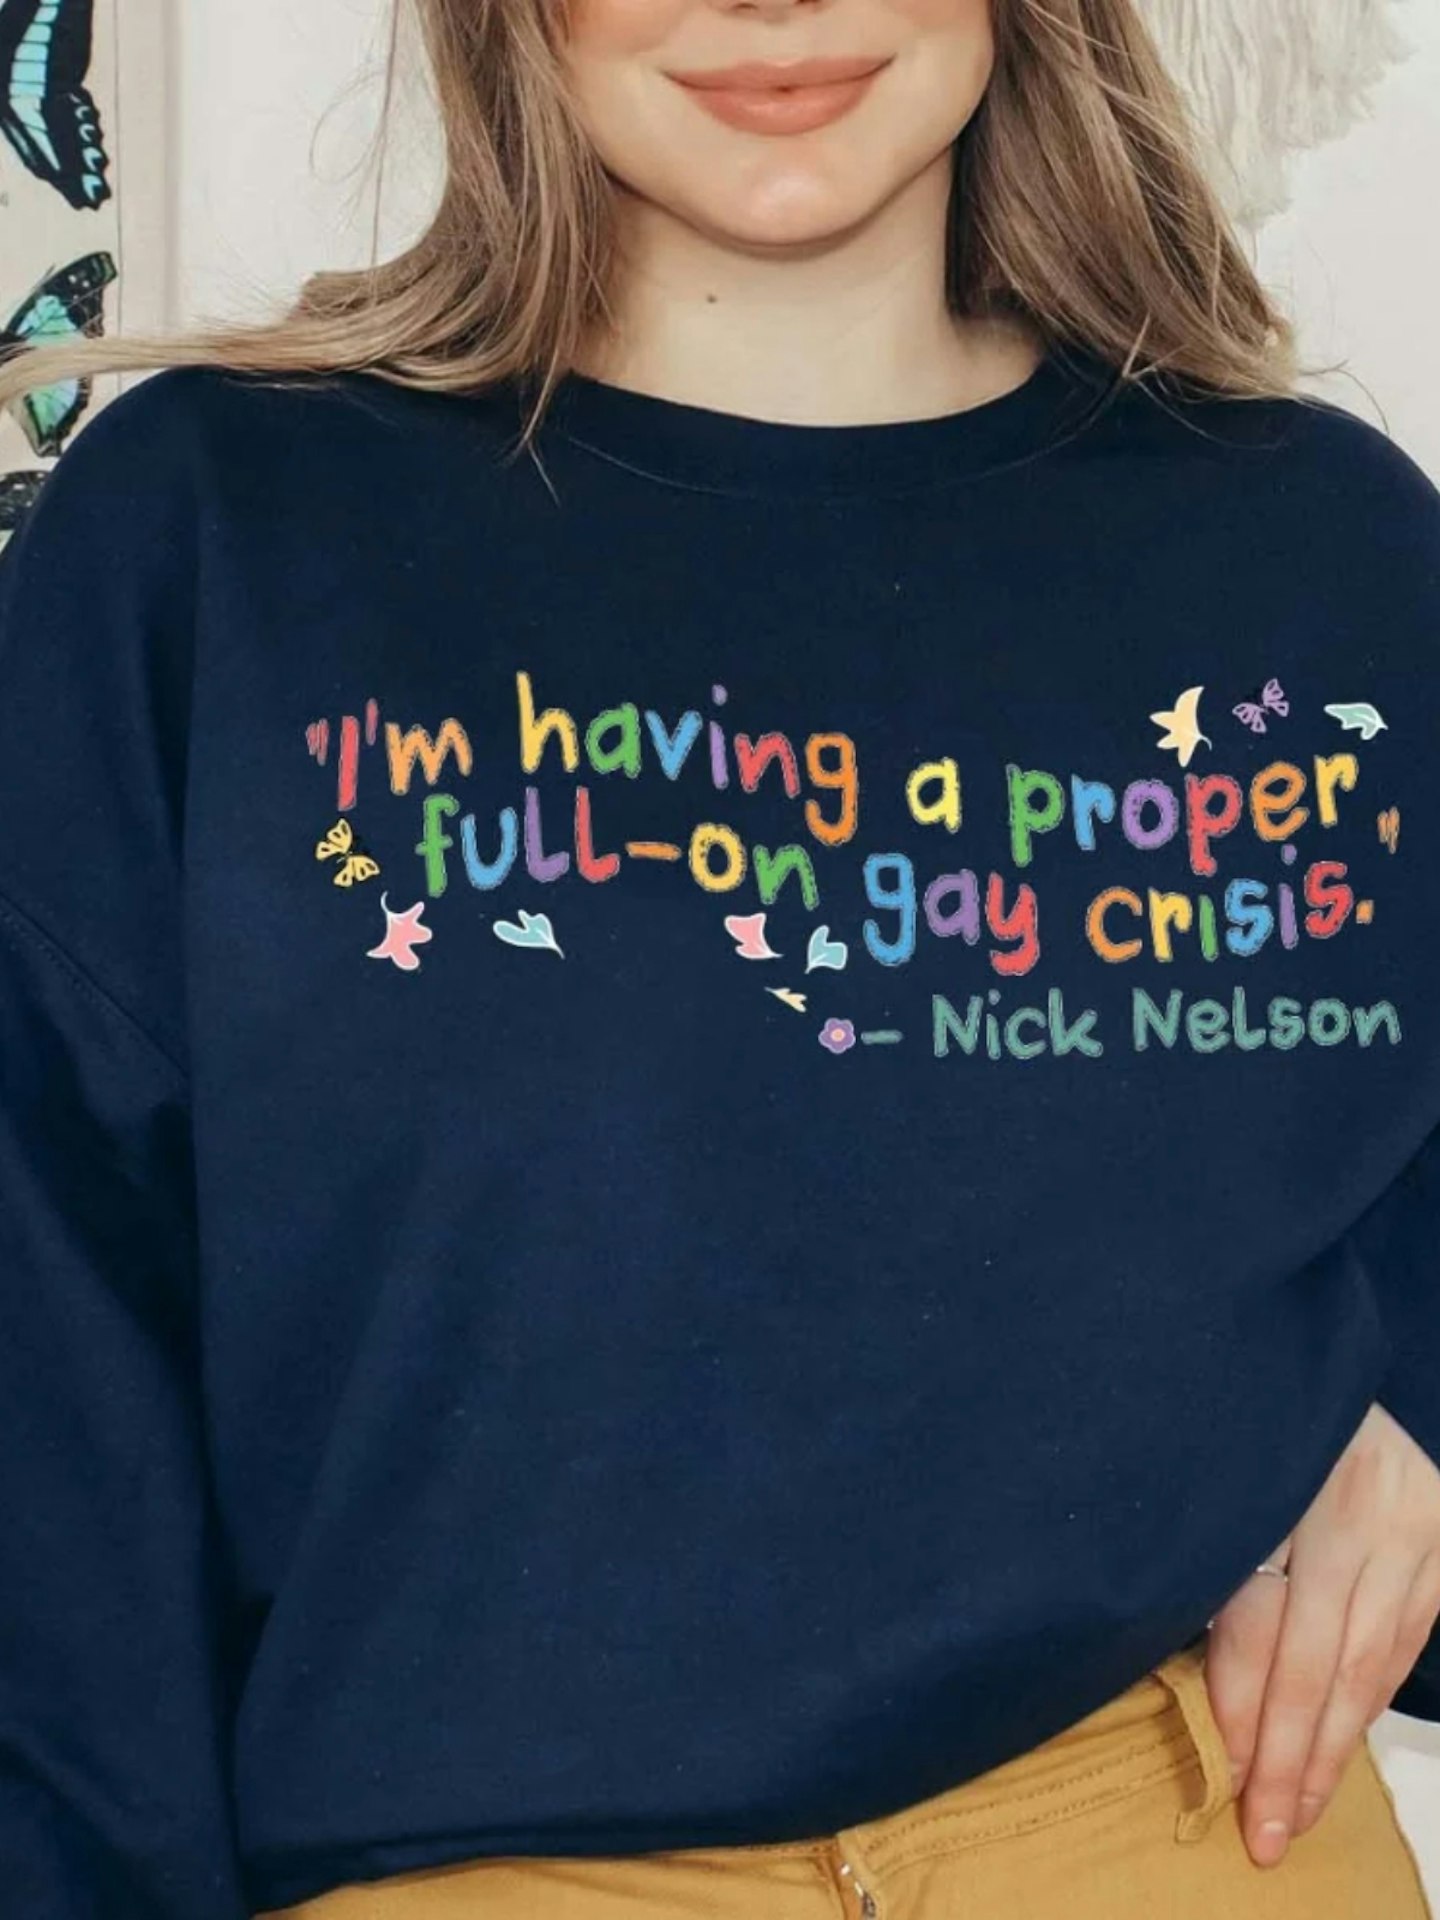 I'm Having A Proper Full-On Gay Crisis Nick Nelson Sweatshirt